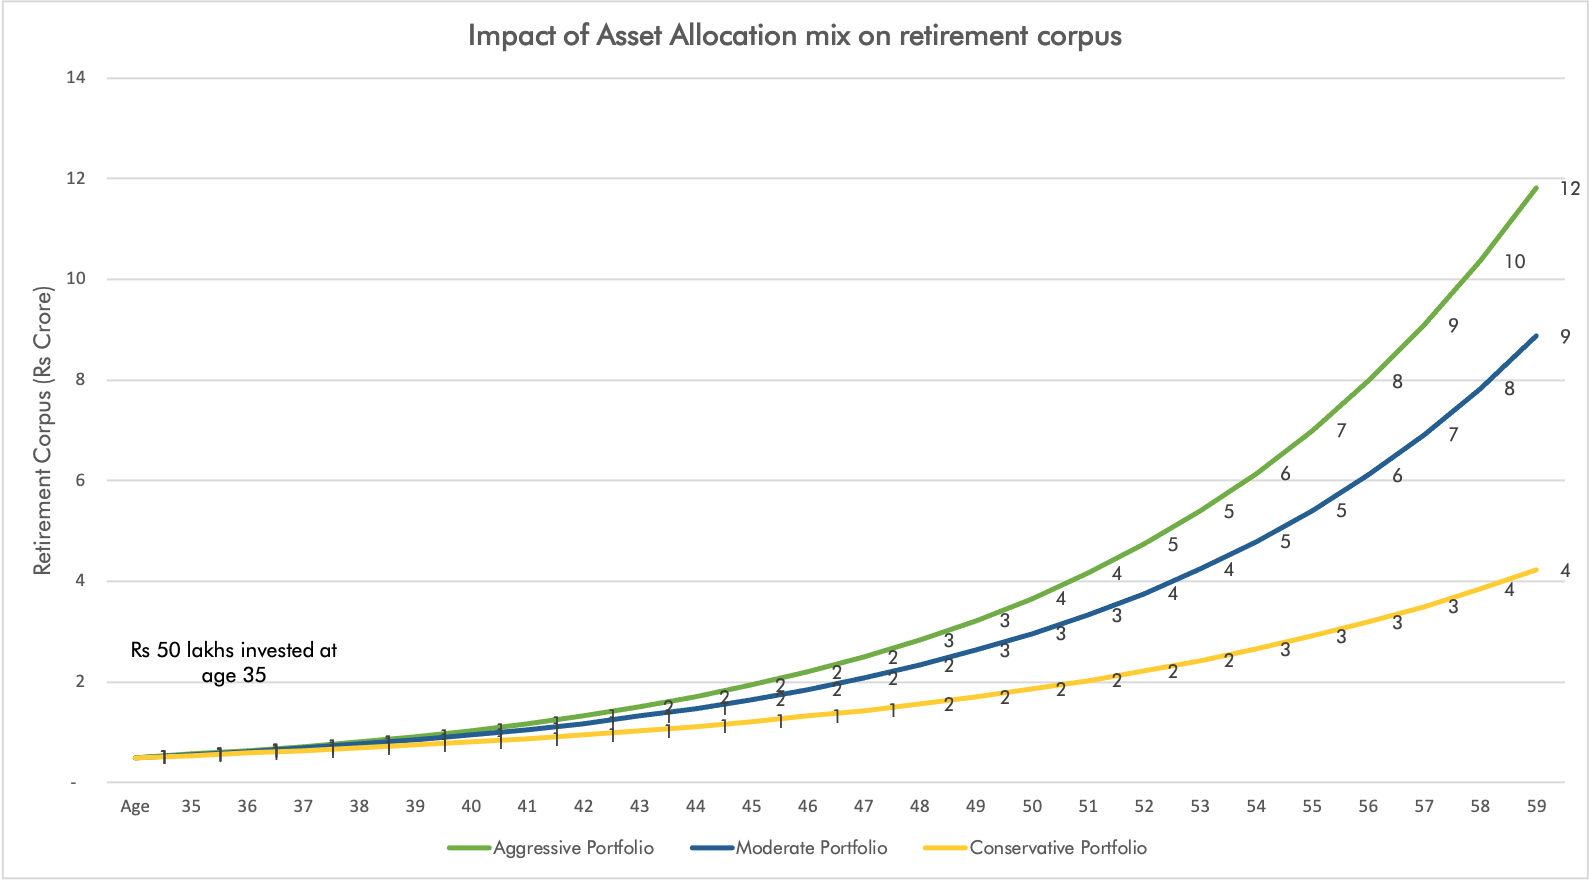 Impact of Asset Allocation on Retirement Corpus